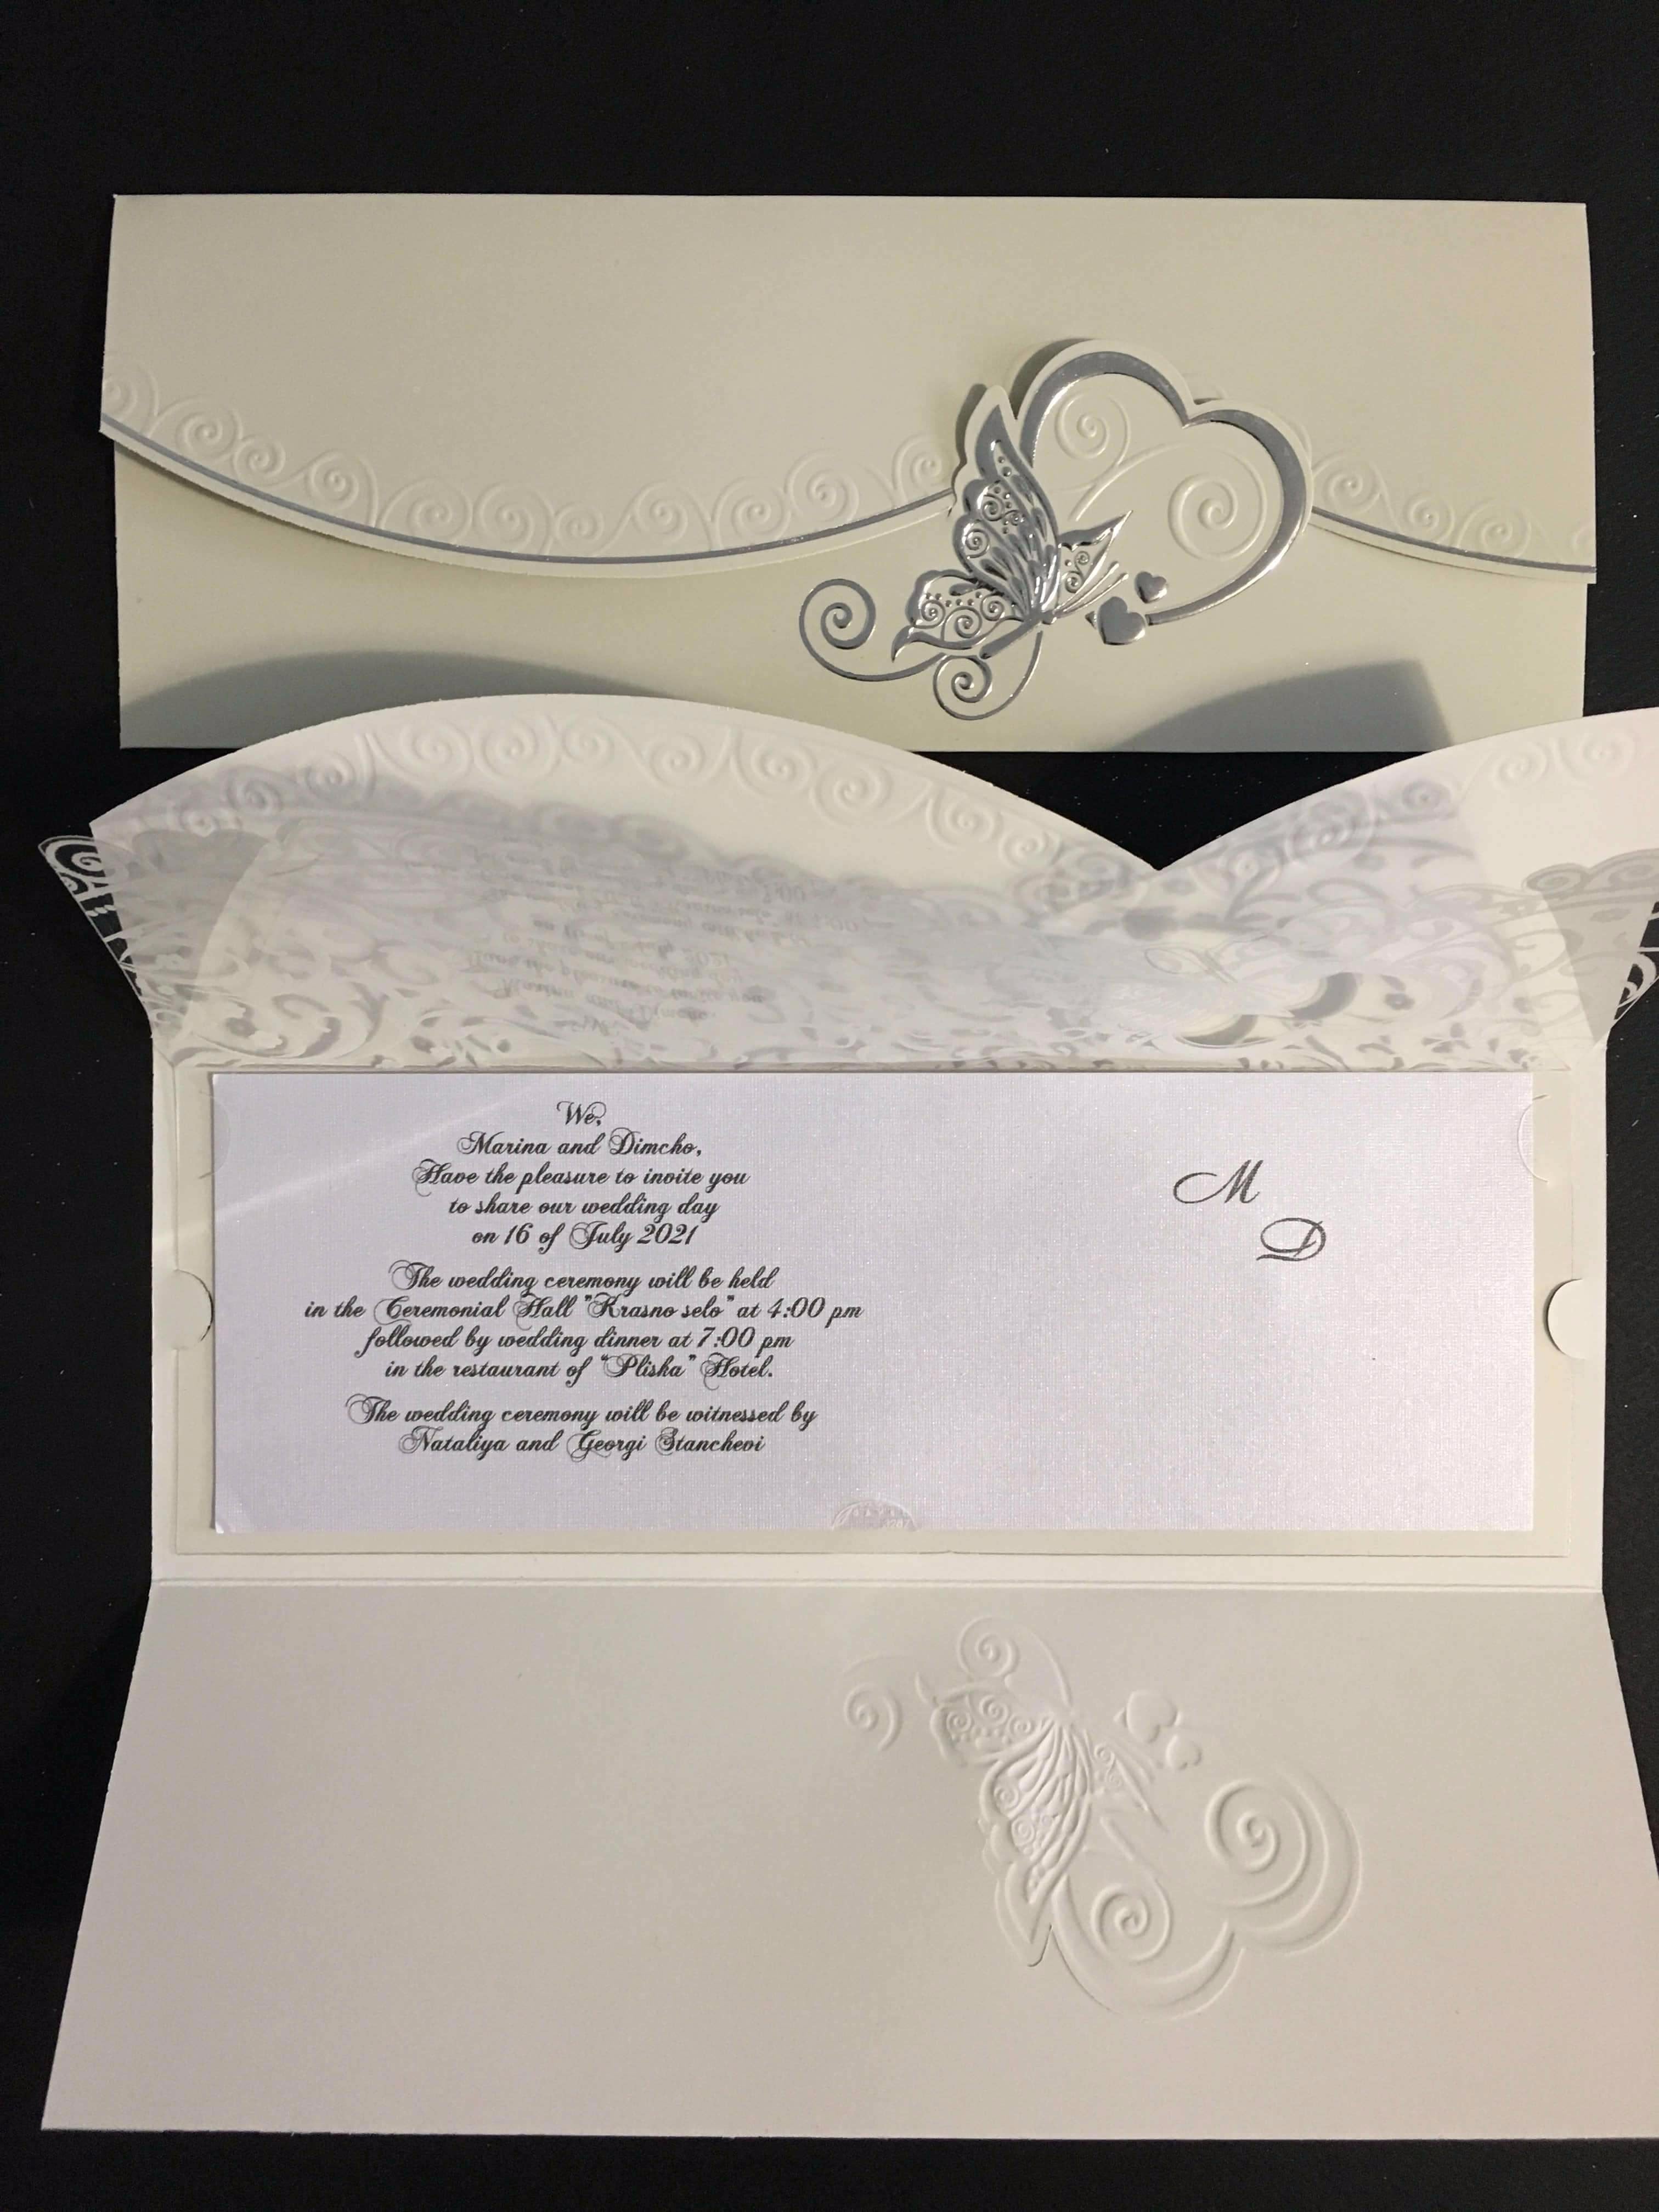 classy embossed wedding invitations uk 